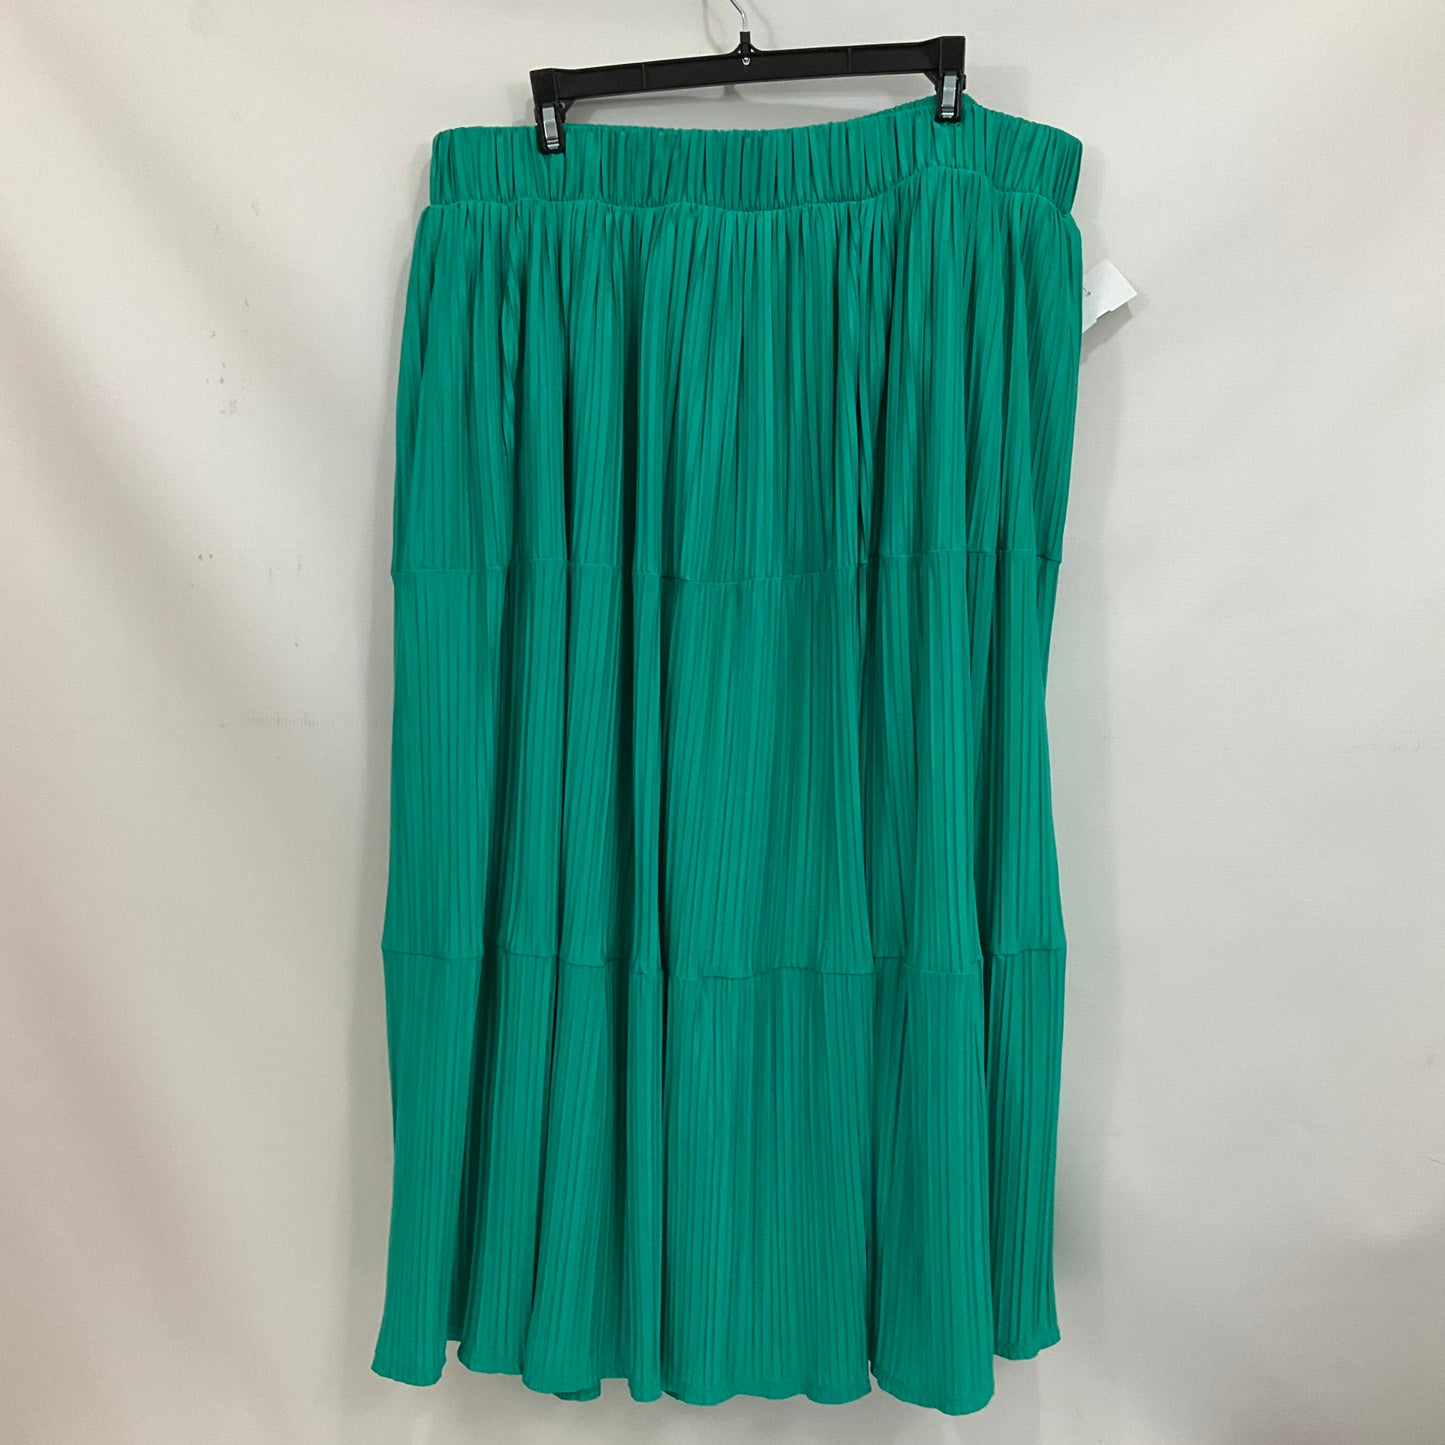 Skirt Maxi By Torrid  Size: 1x